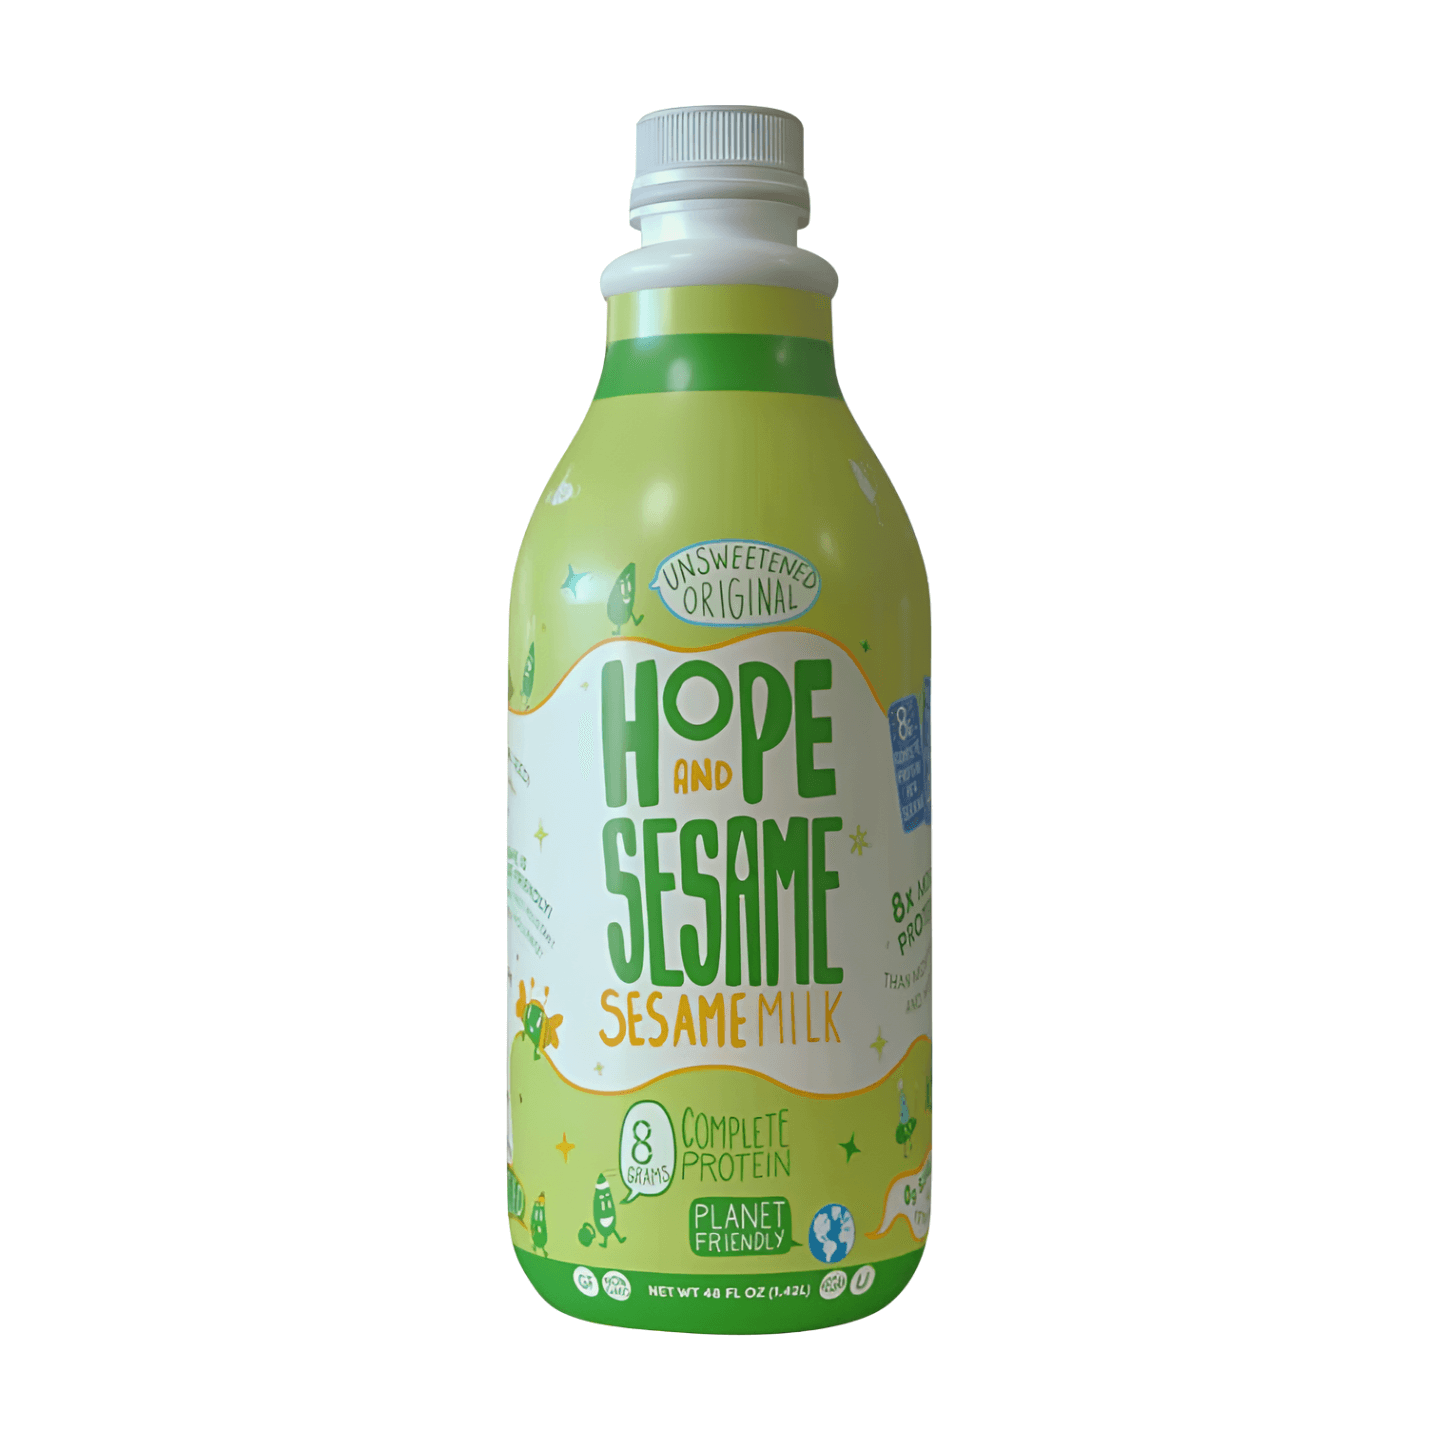 Hope And Sesame Refrigerated Unsweetened Original Sesamemilk